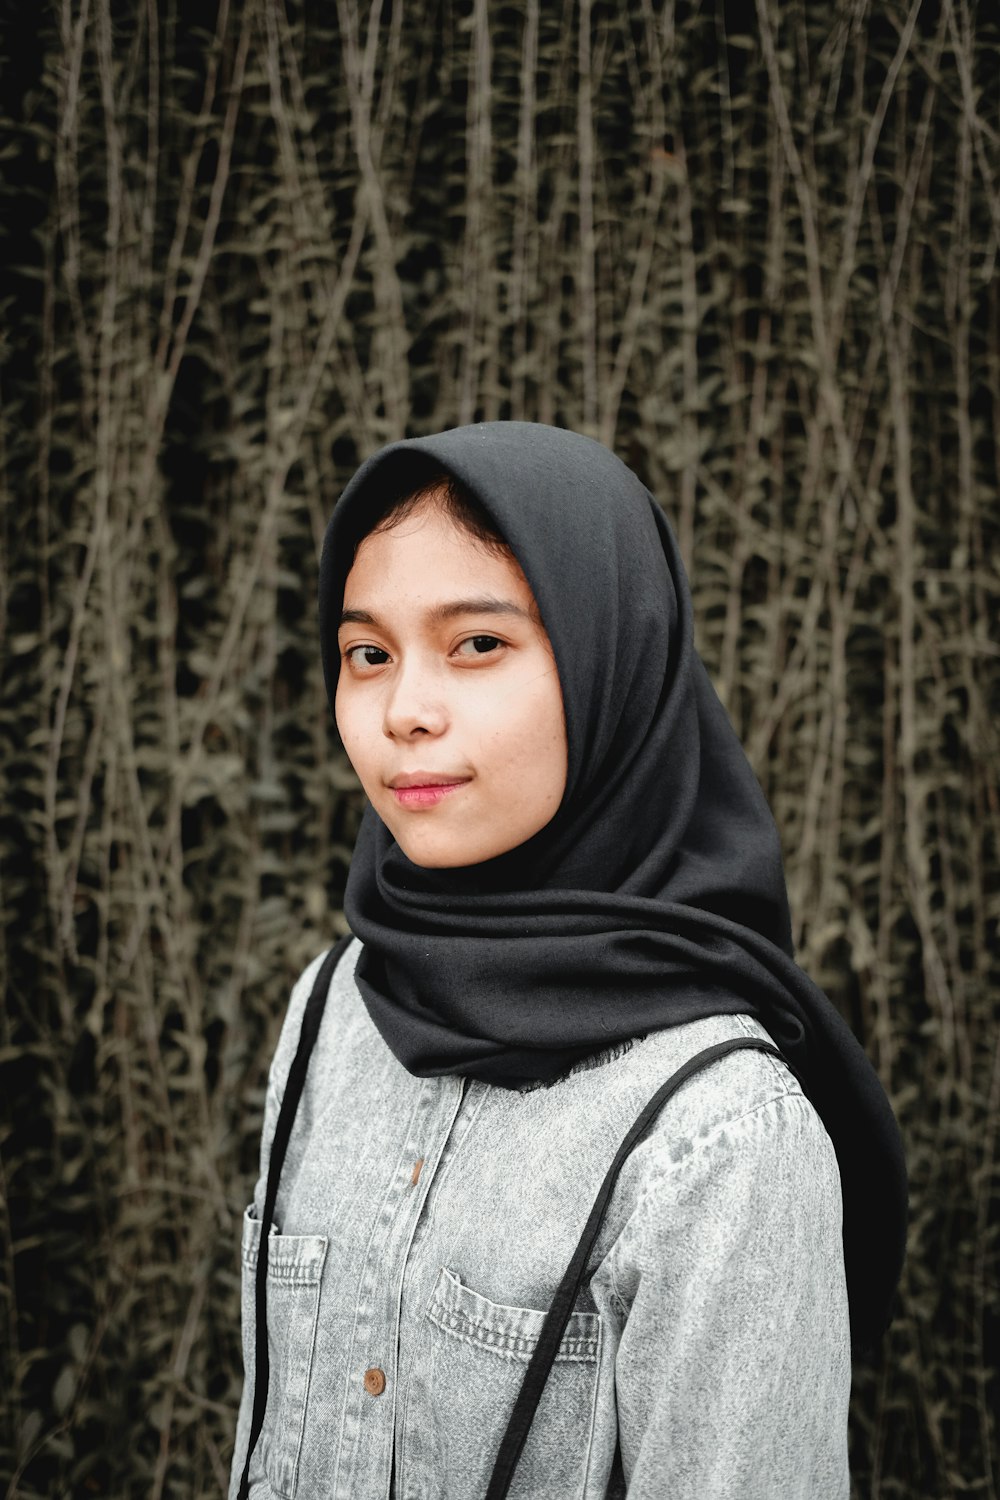 woman in black hijab standing near trees